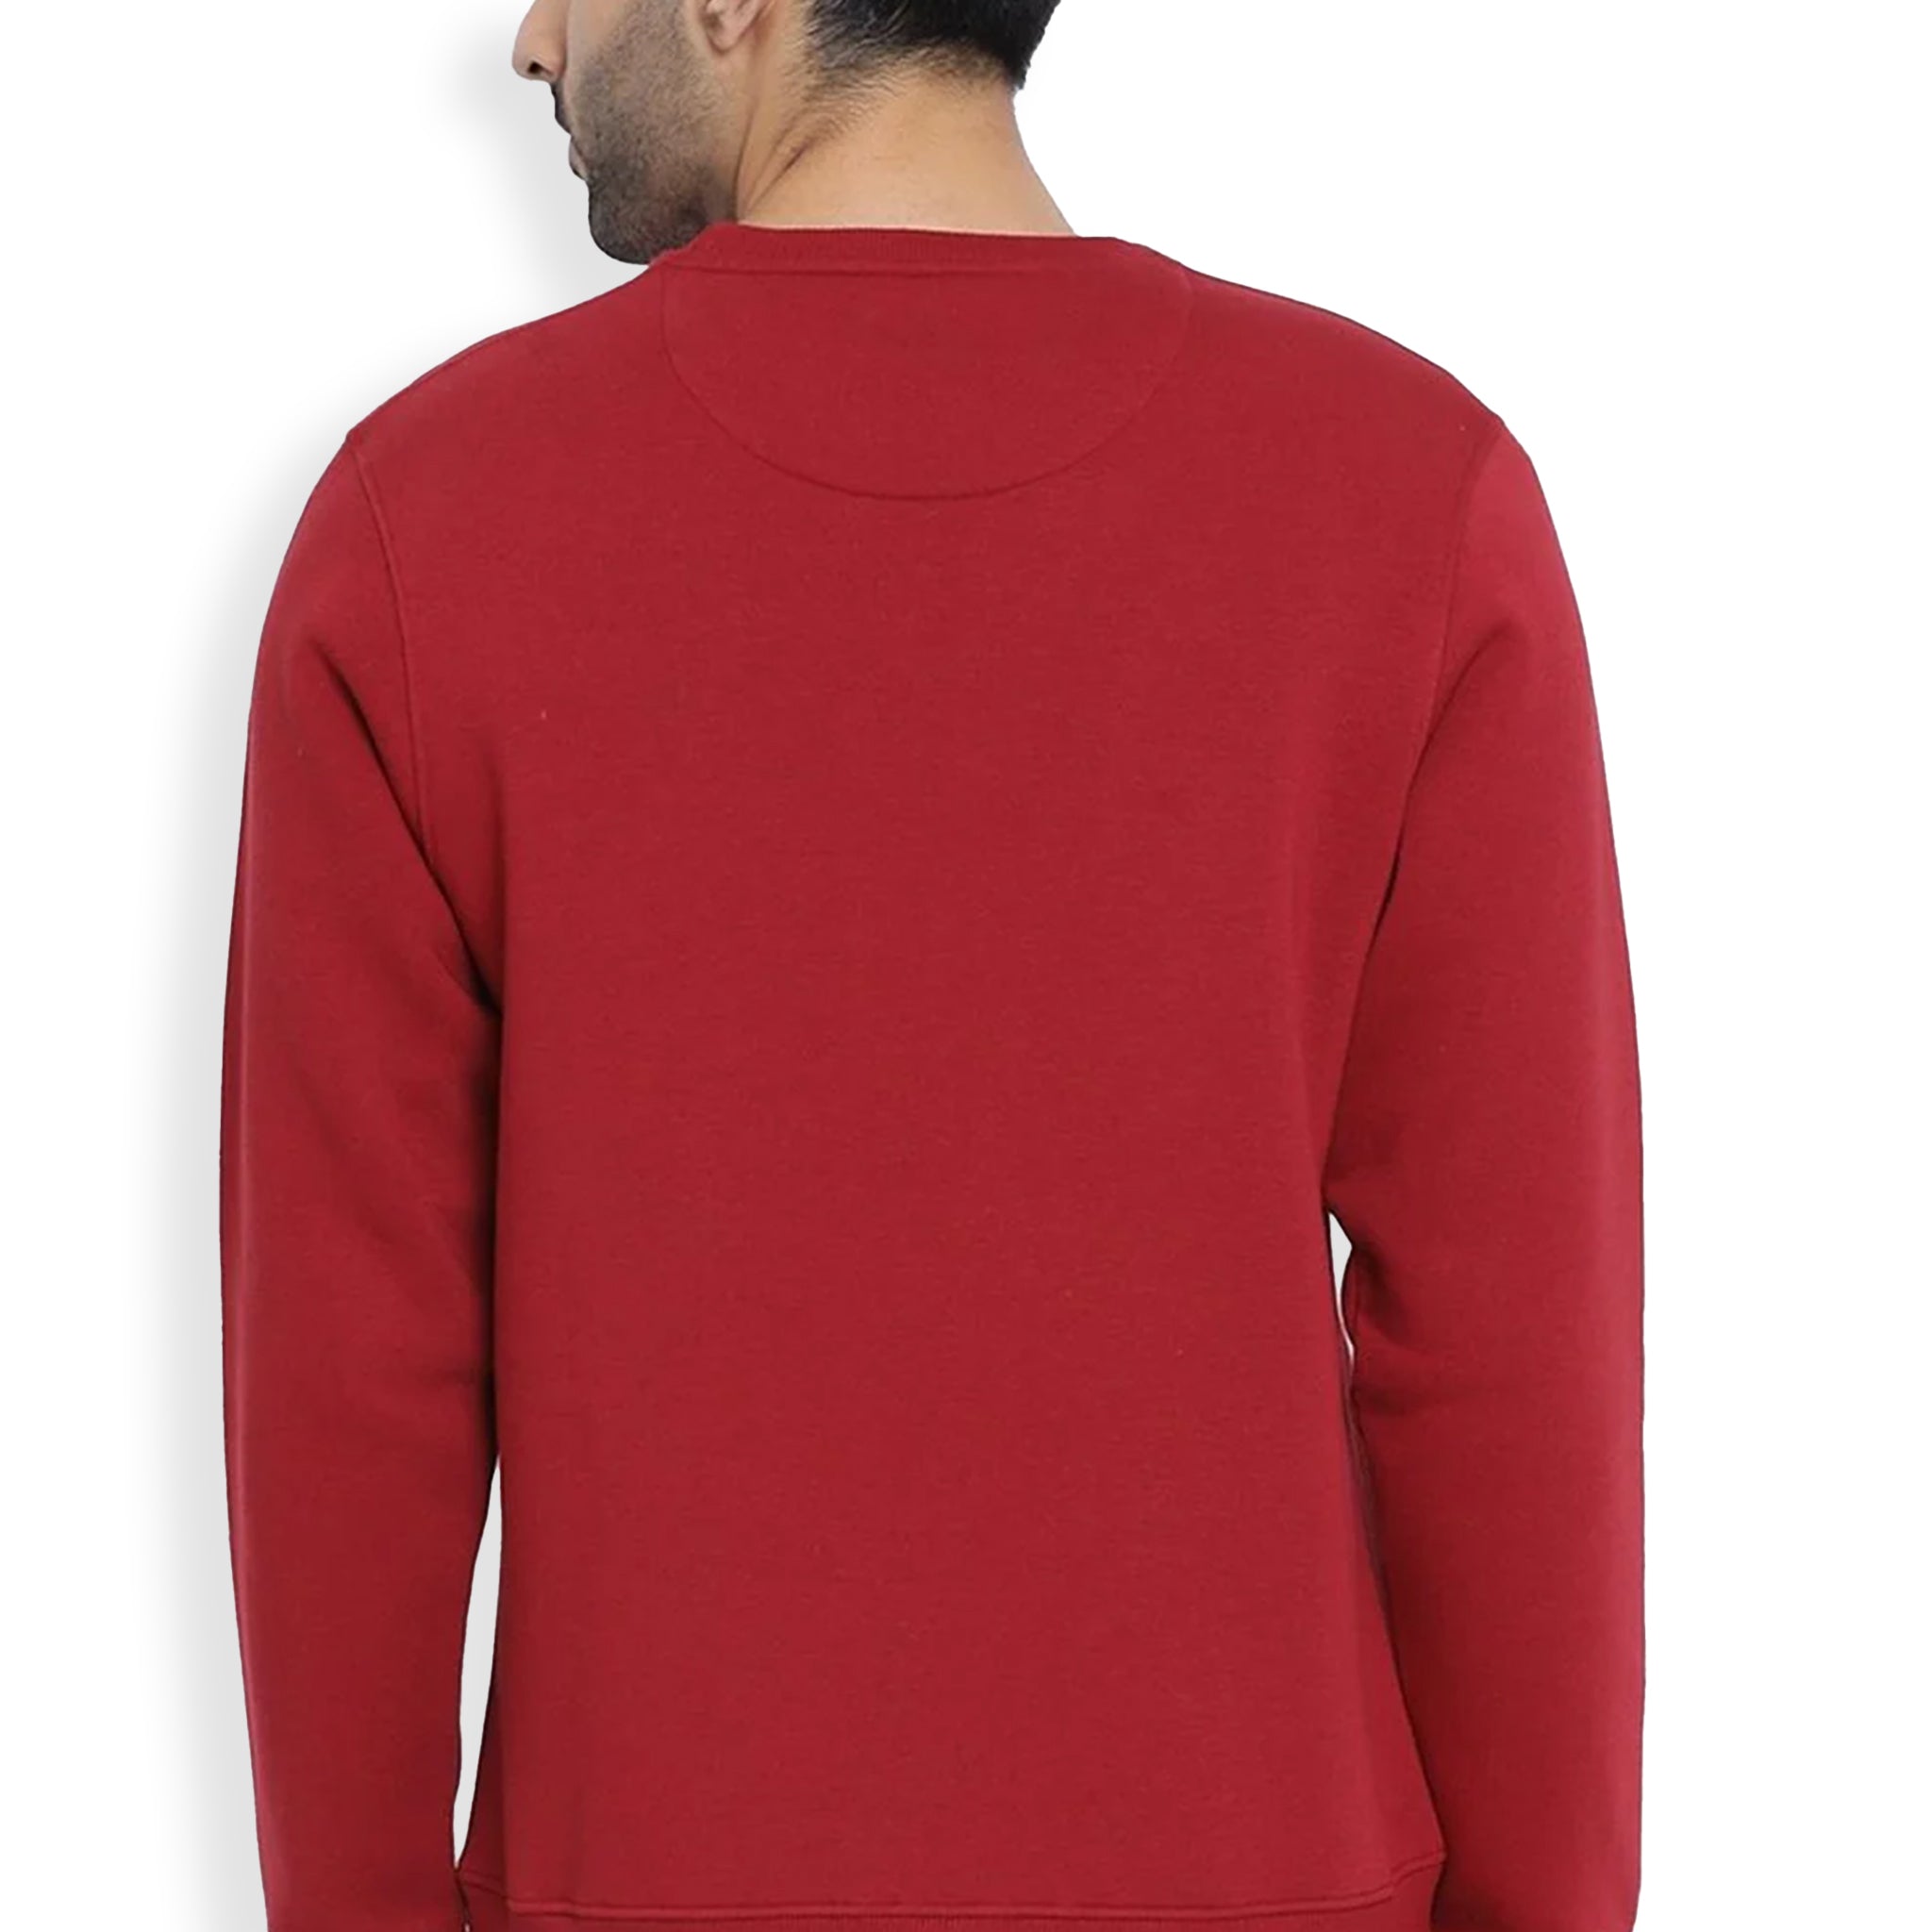 Bizzar's Maroon Sweatshirt